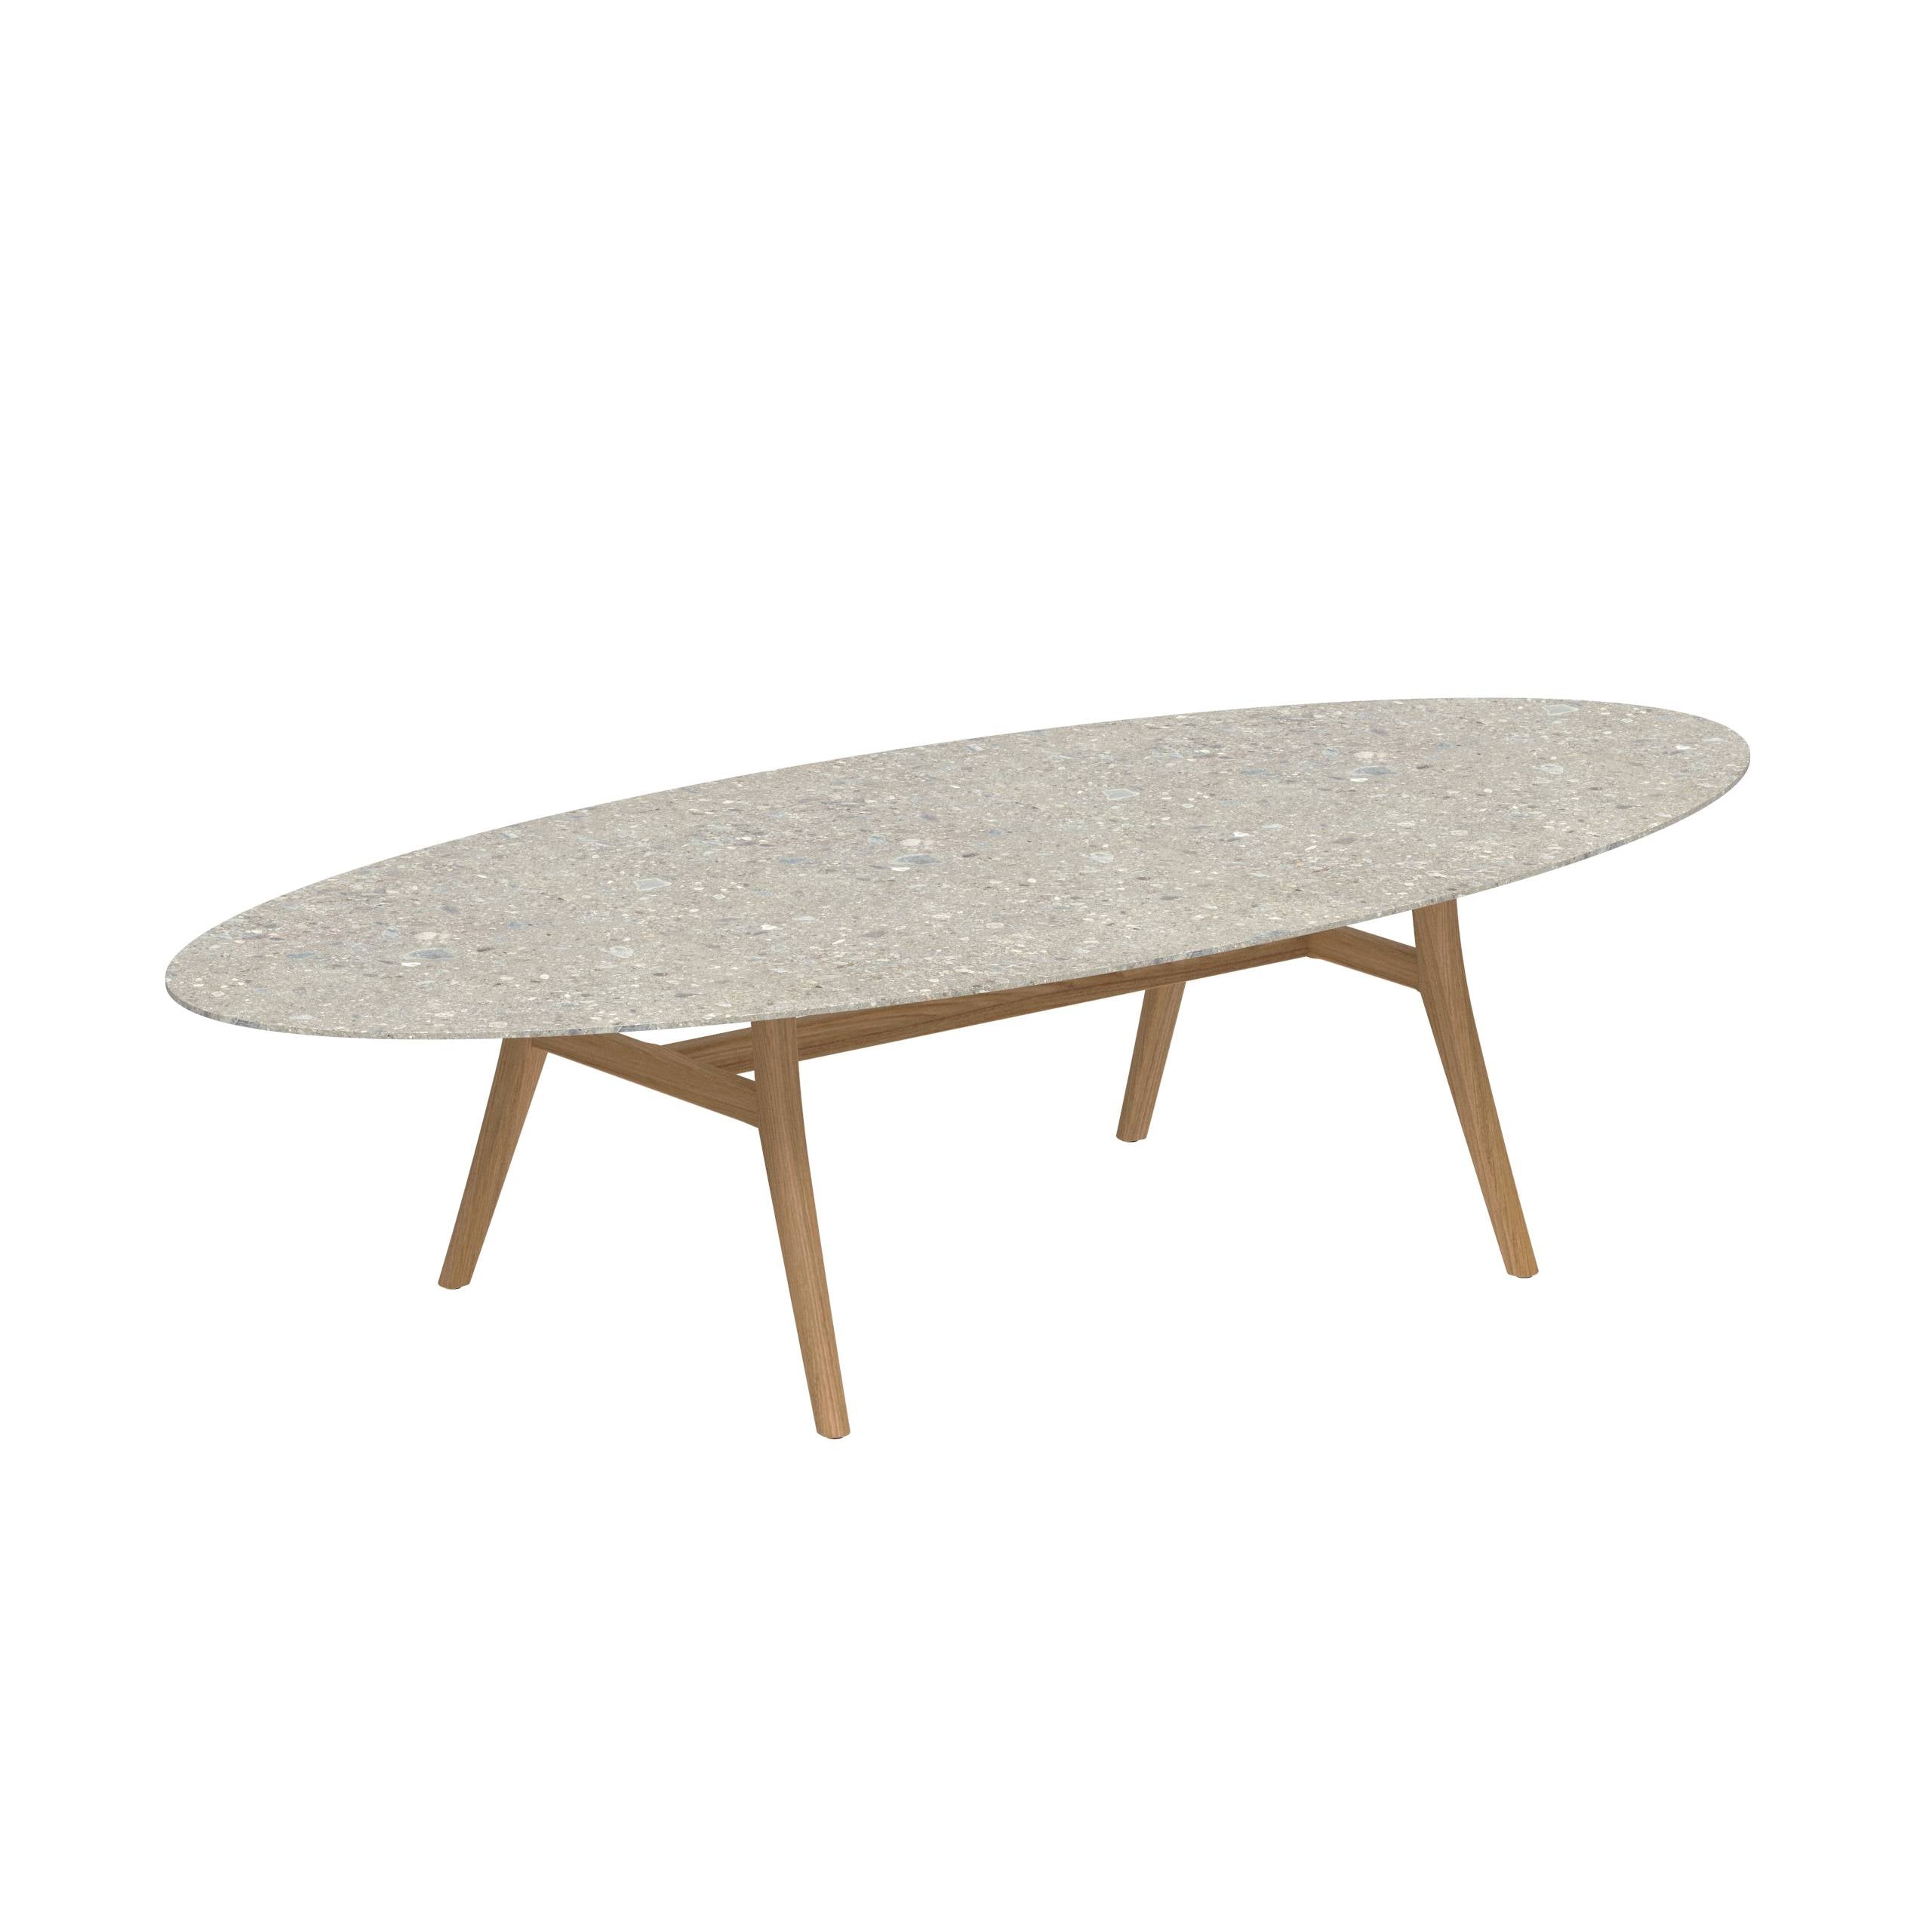 Zidiz Table 320x140cm Teak Legs - Ceramic Table Top Ceppo Dolomitica